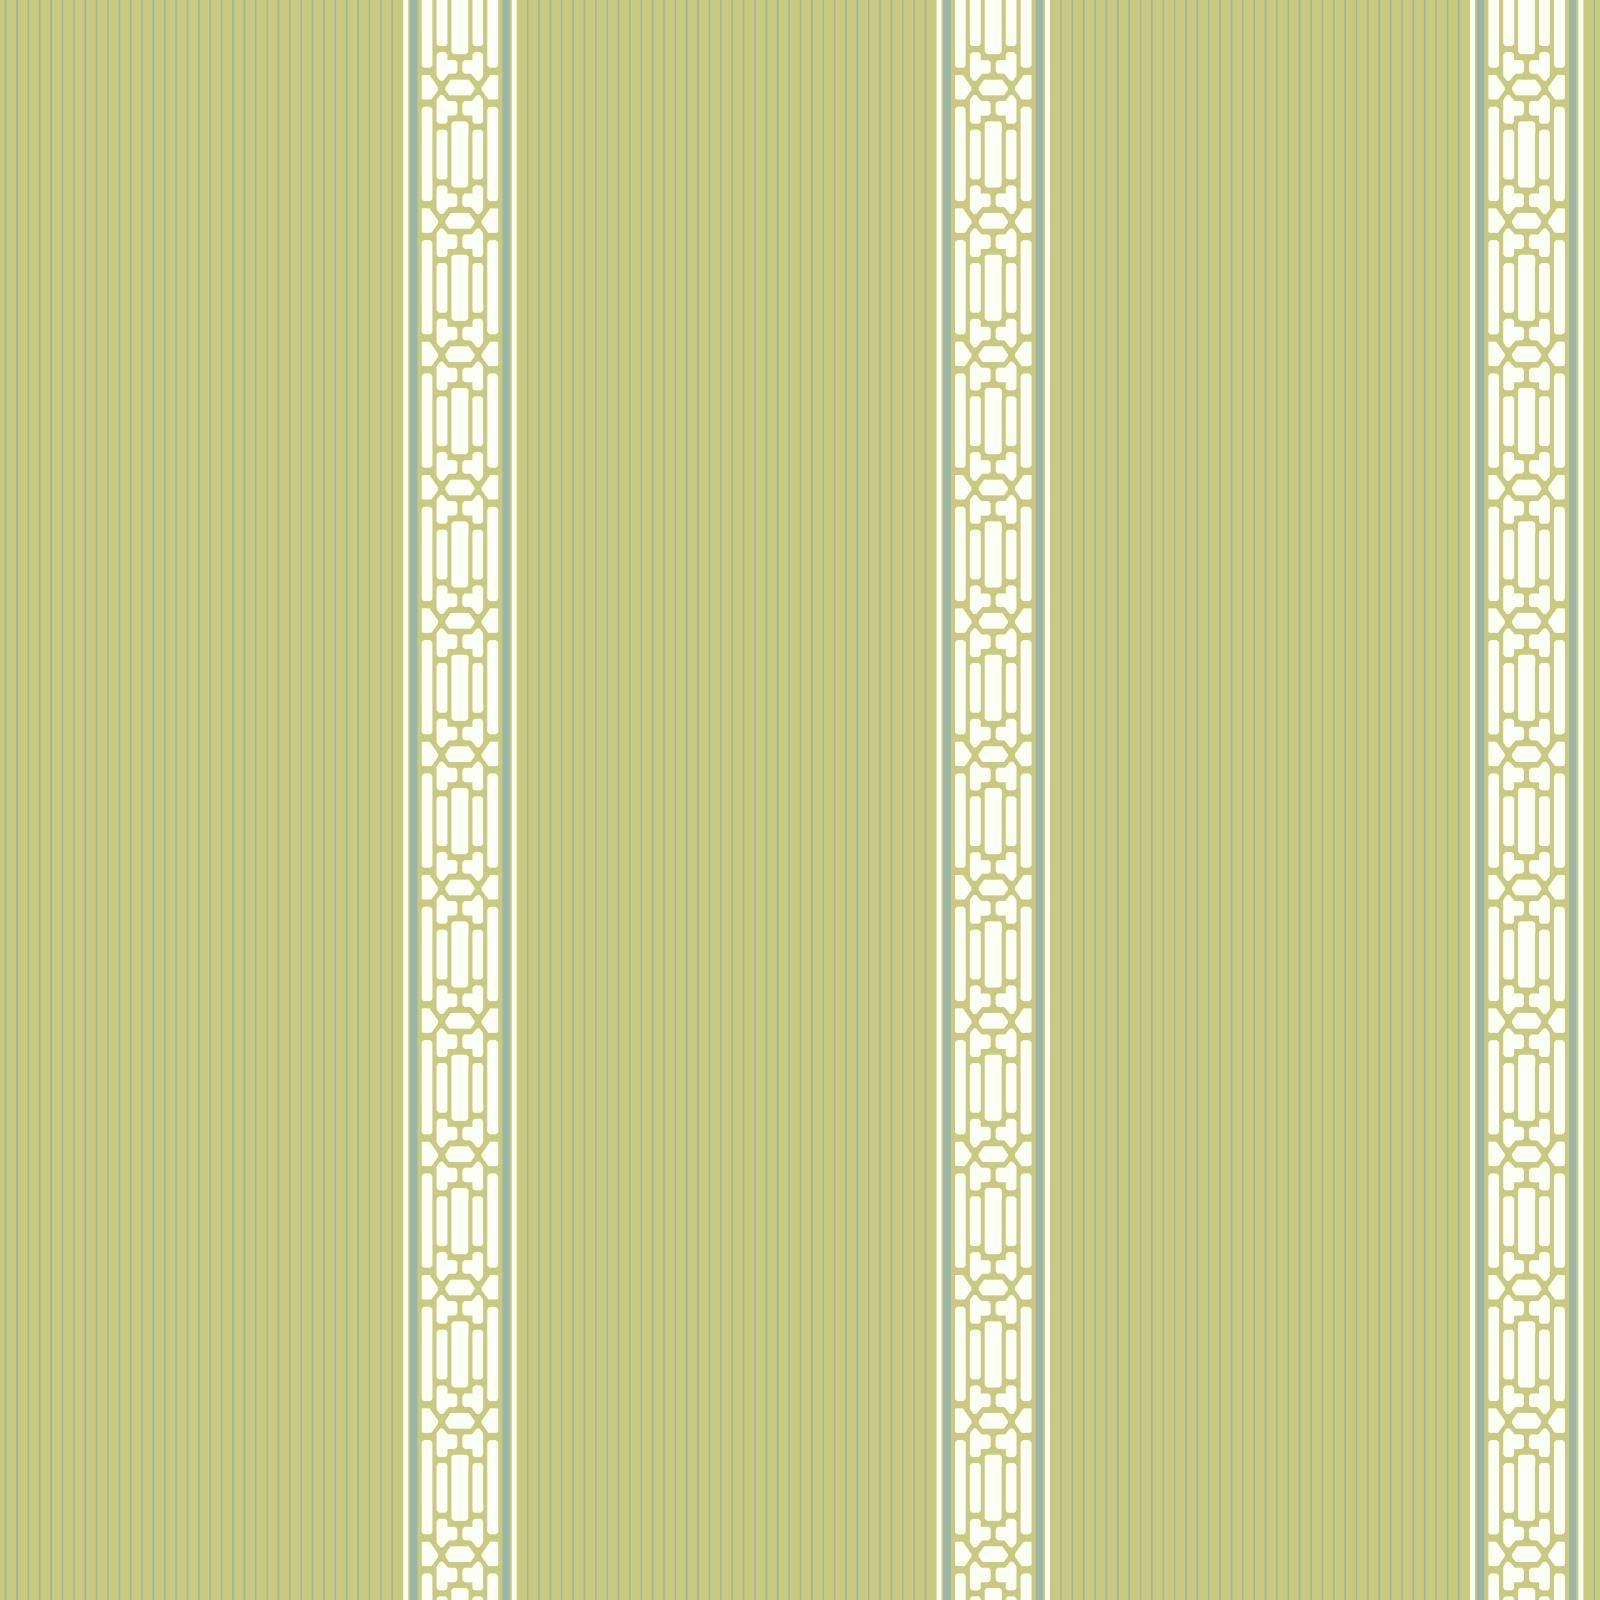 York Wallcoverings Green  Oriental Banding Stripe Wallpaper in Green, White